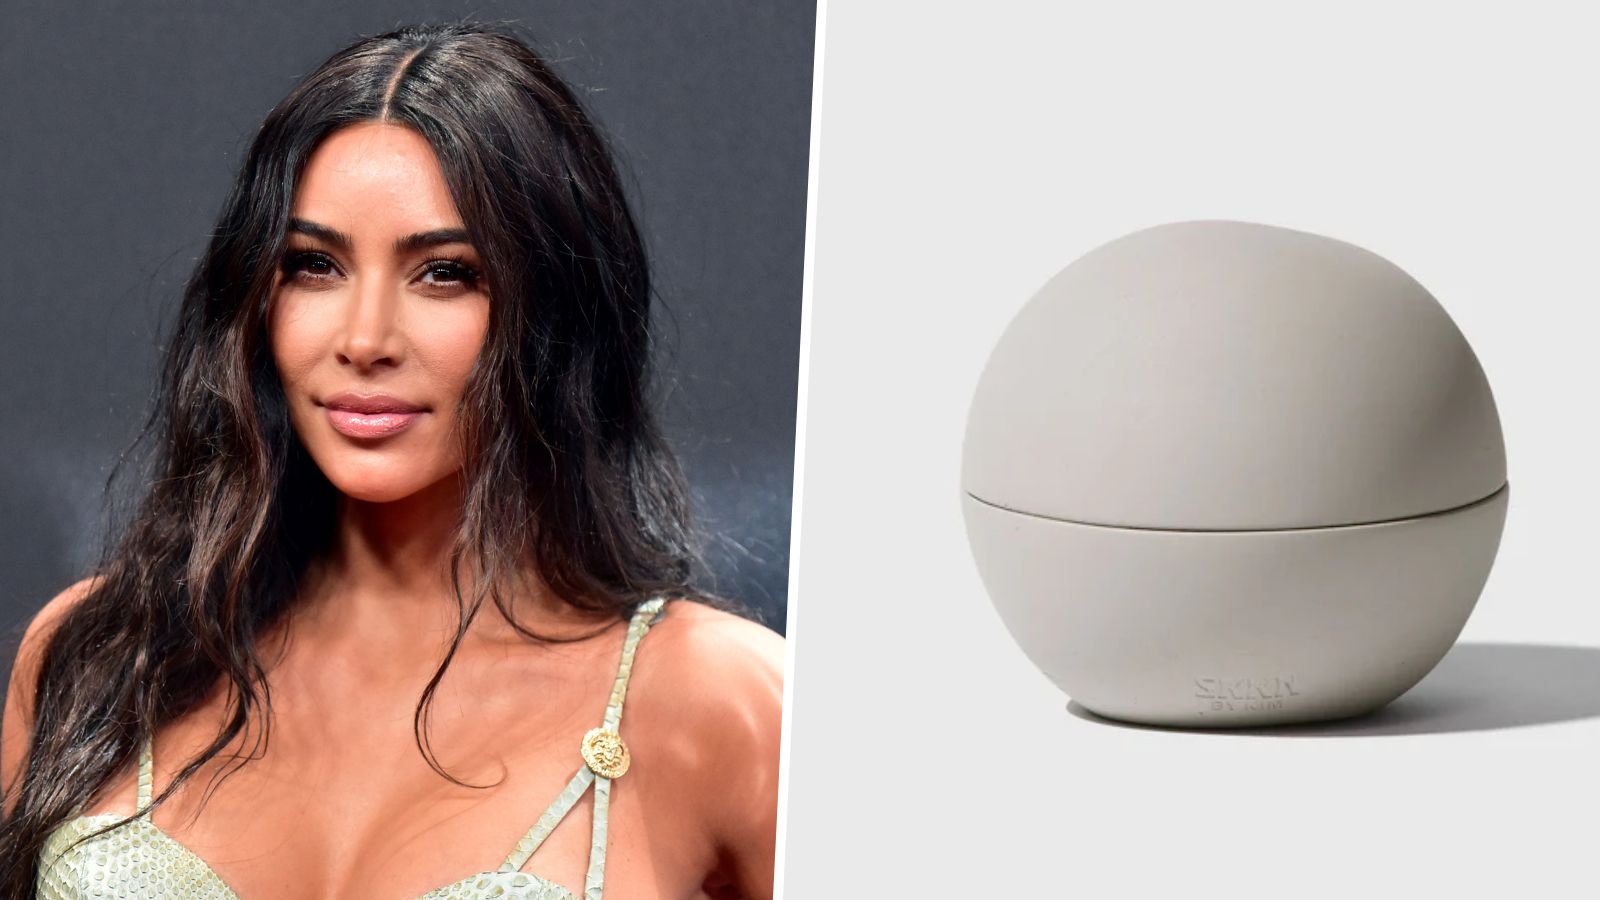 Kim Kardashian's home accessories can upgrade any bathroom